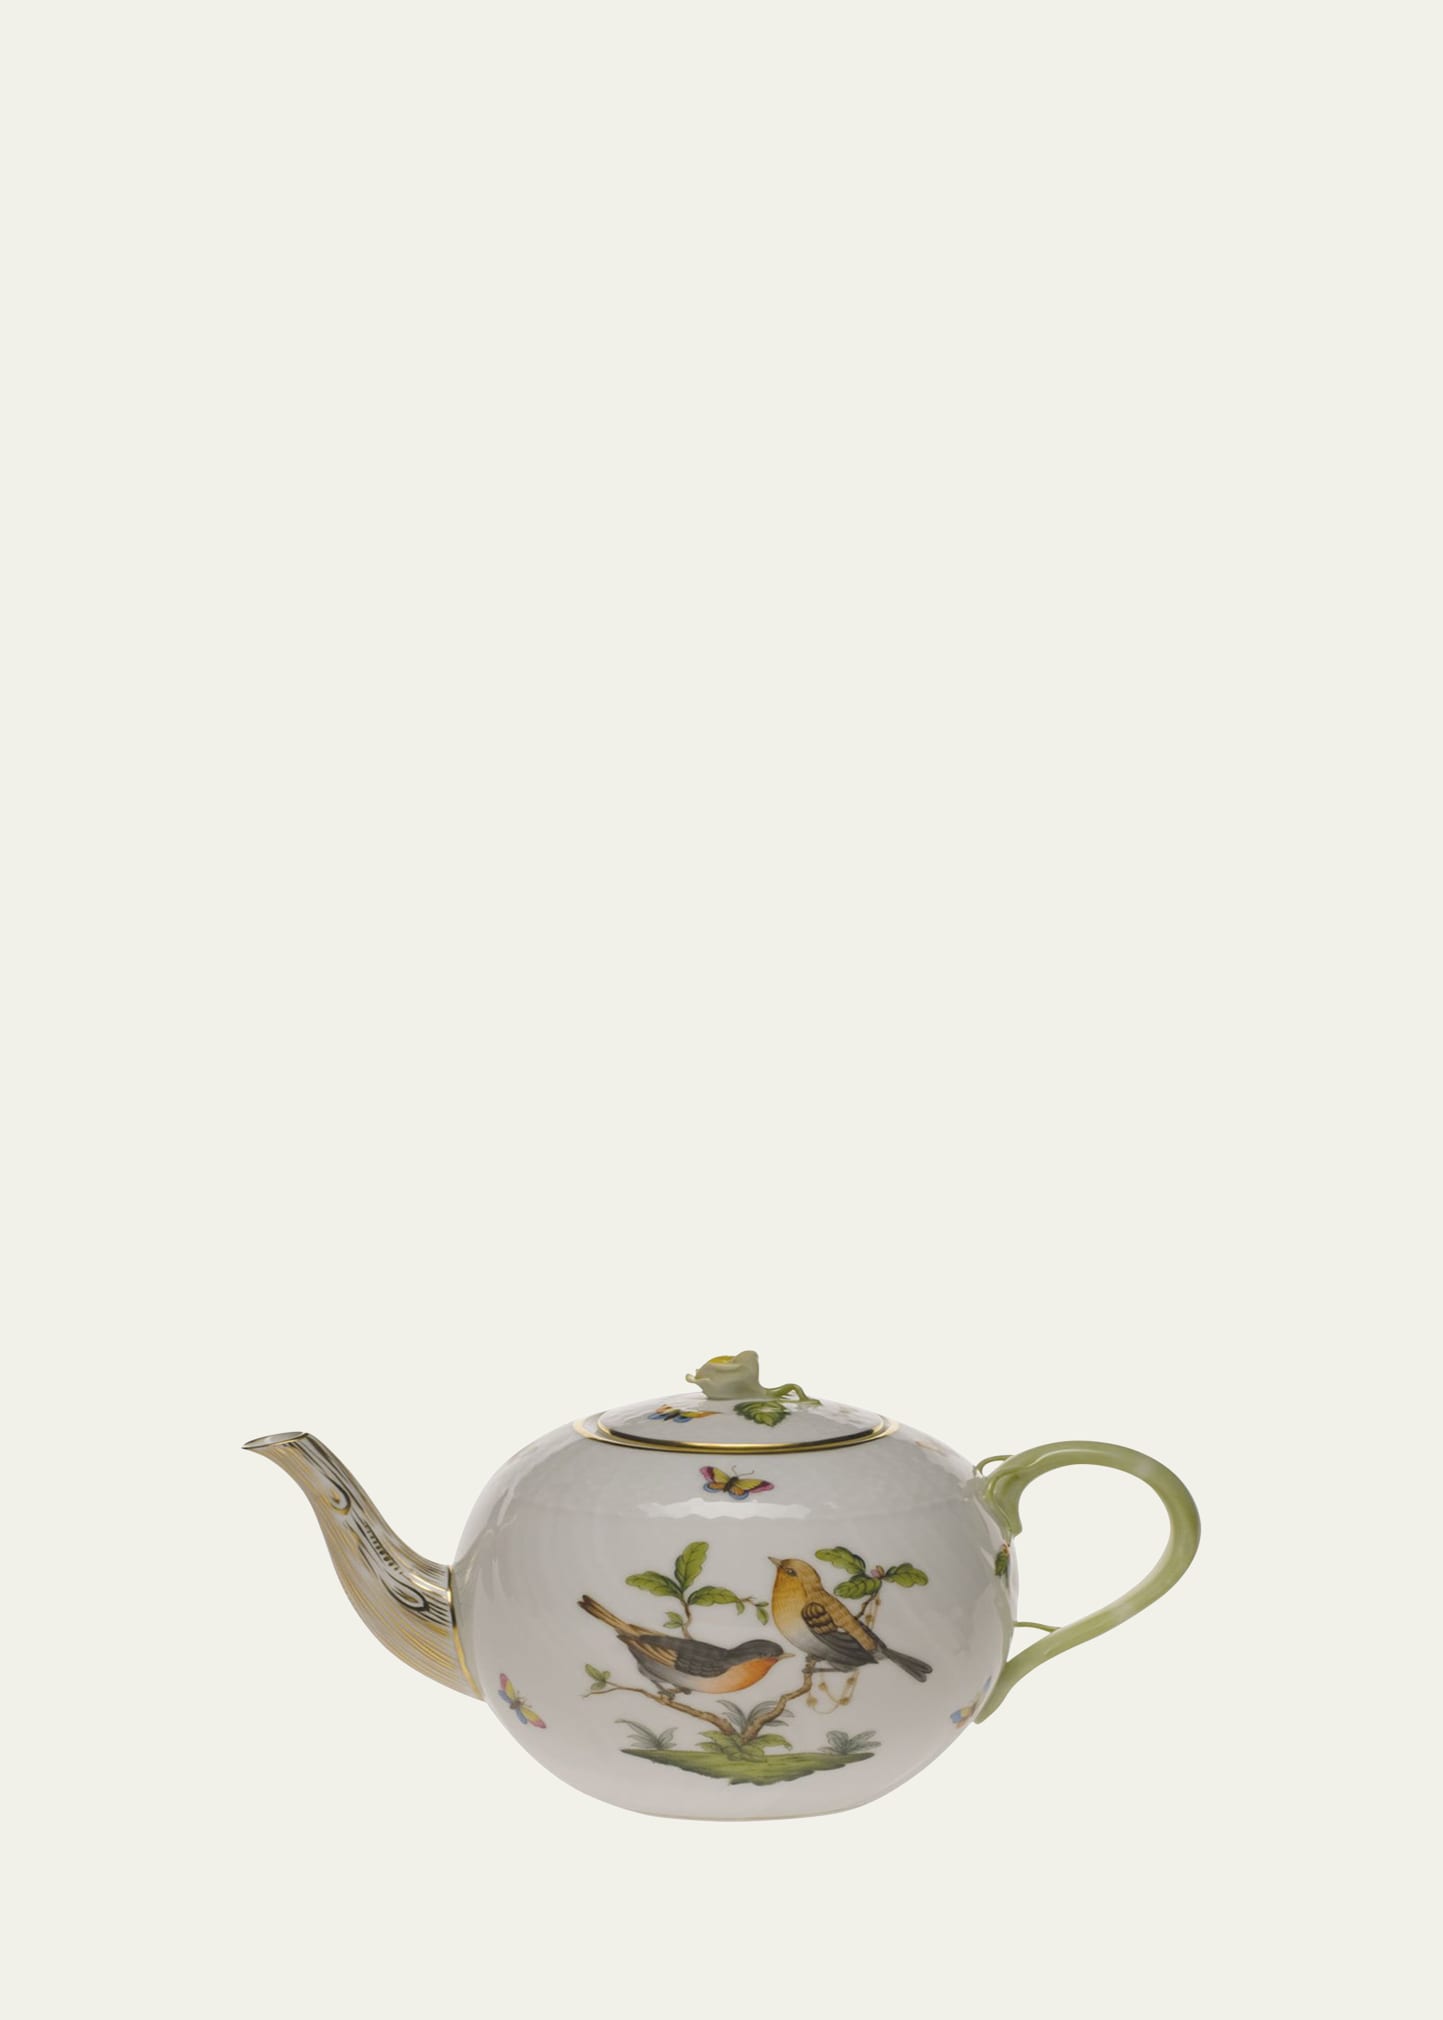 Rothschild Bird Teapot with Rose